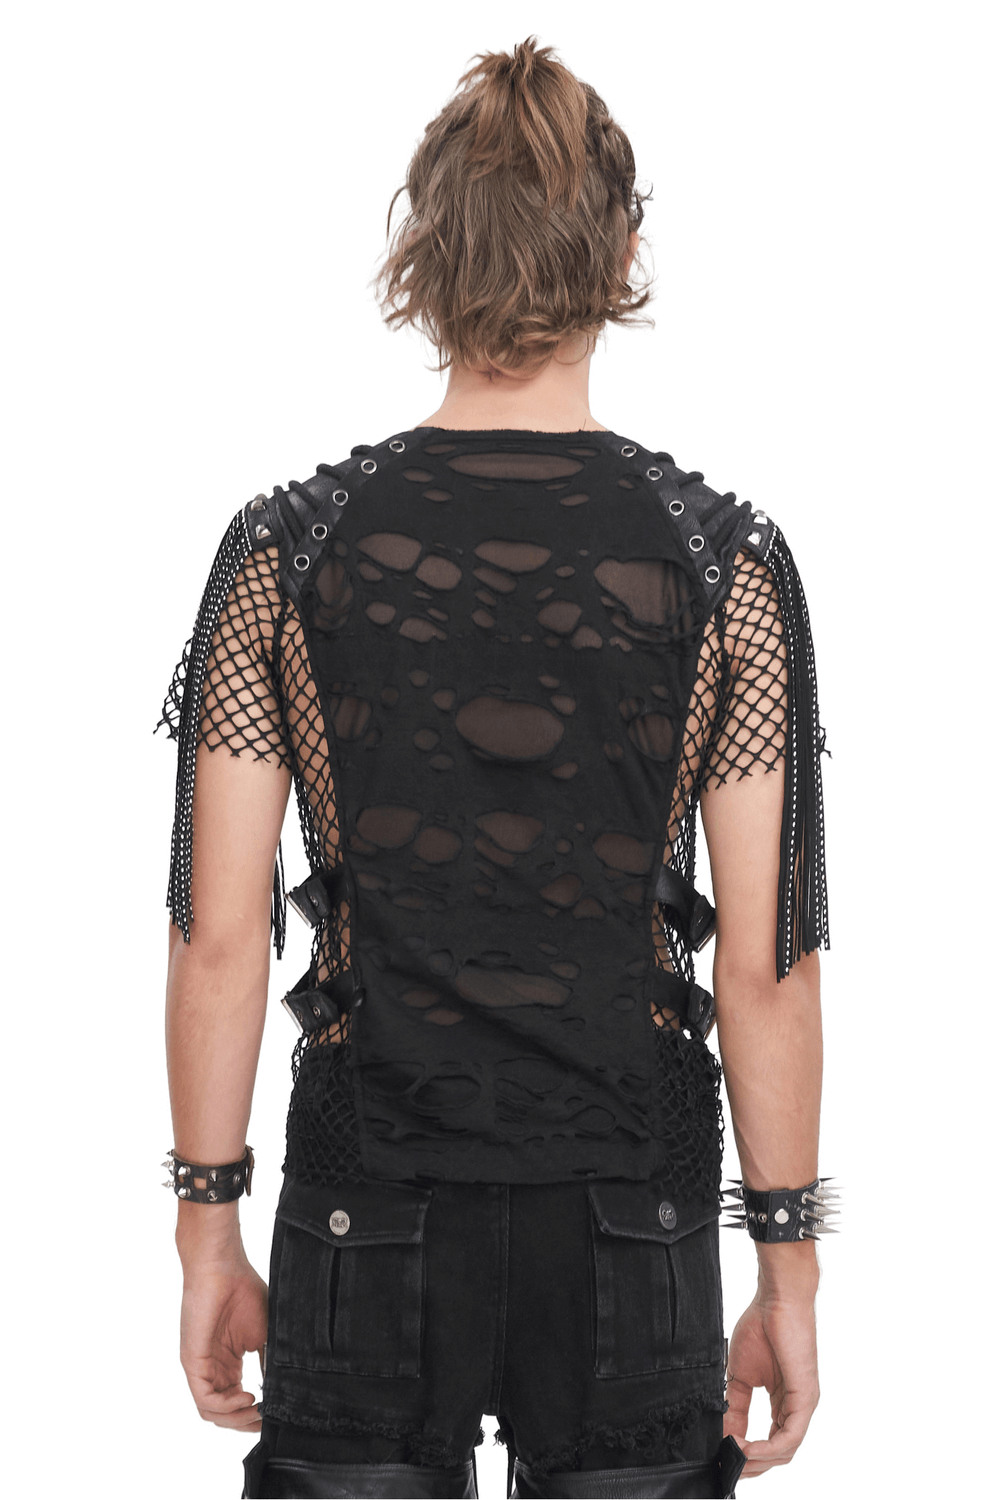 Chic Black Mesh T-Shirt with Fringe Detailing